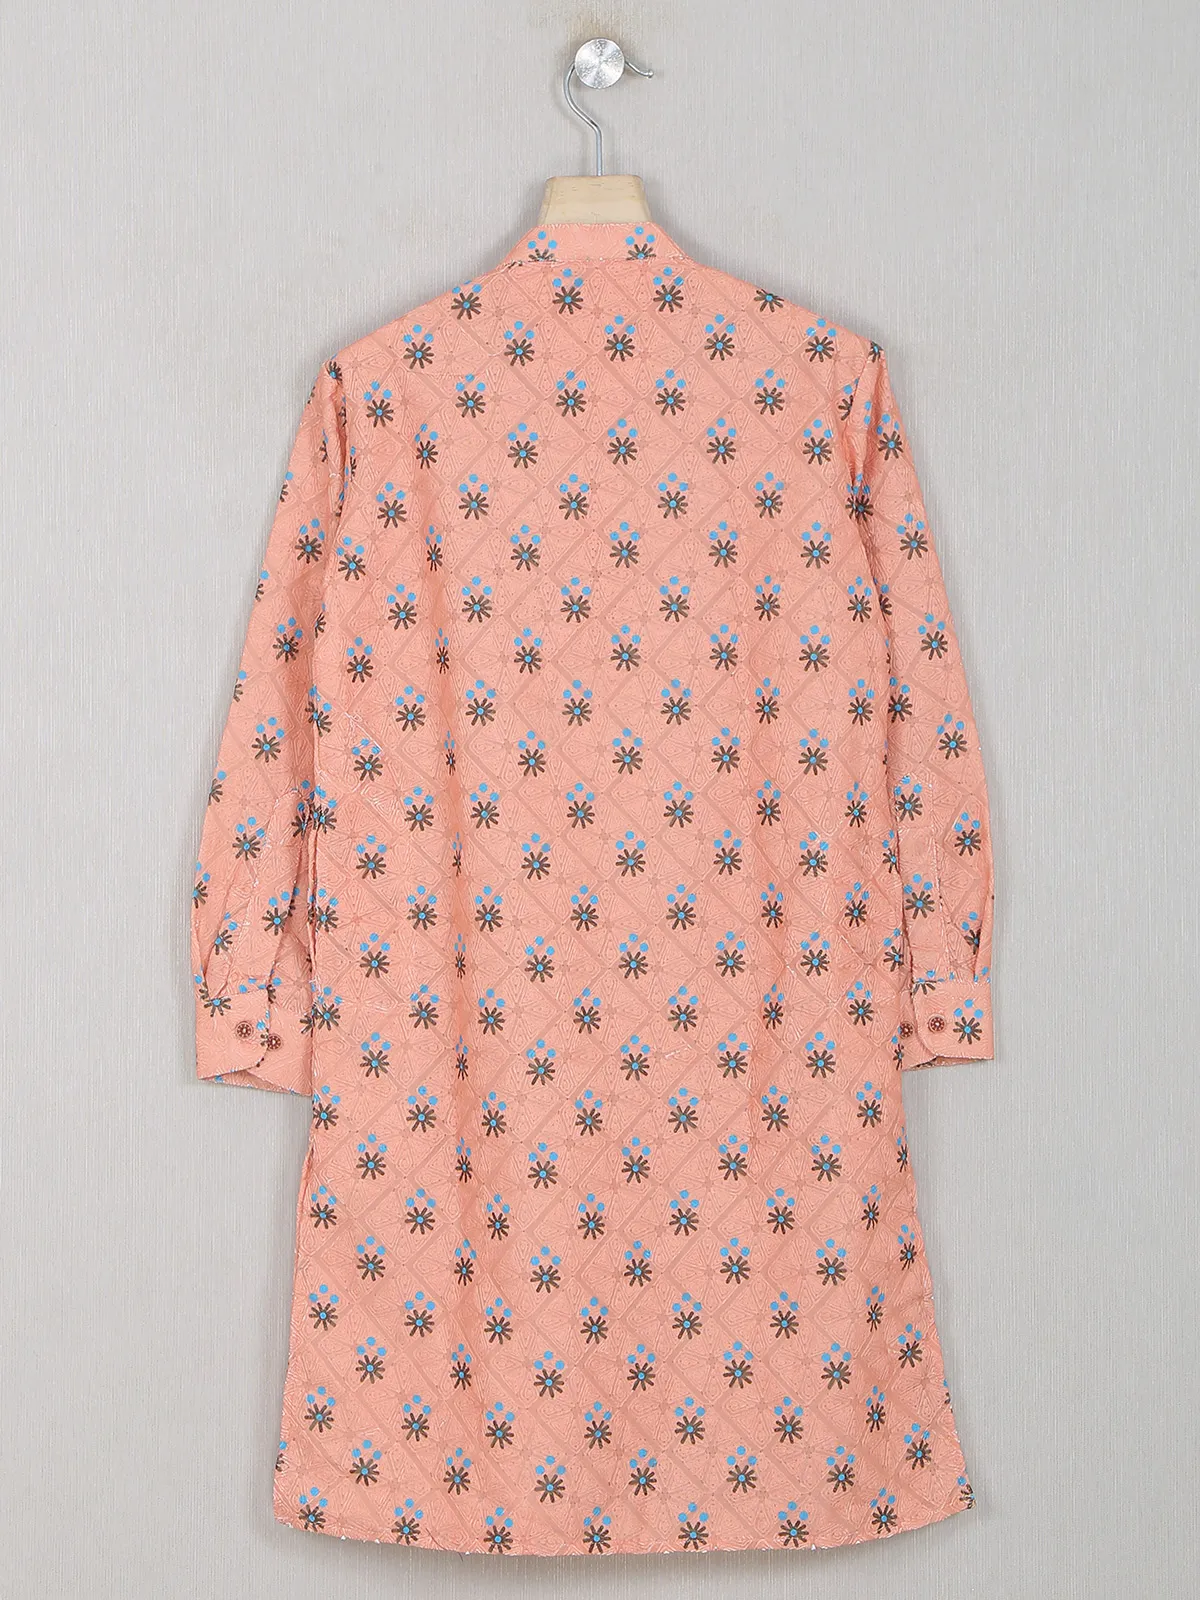 Printed orange kurta suit for little boys in cotton